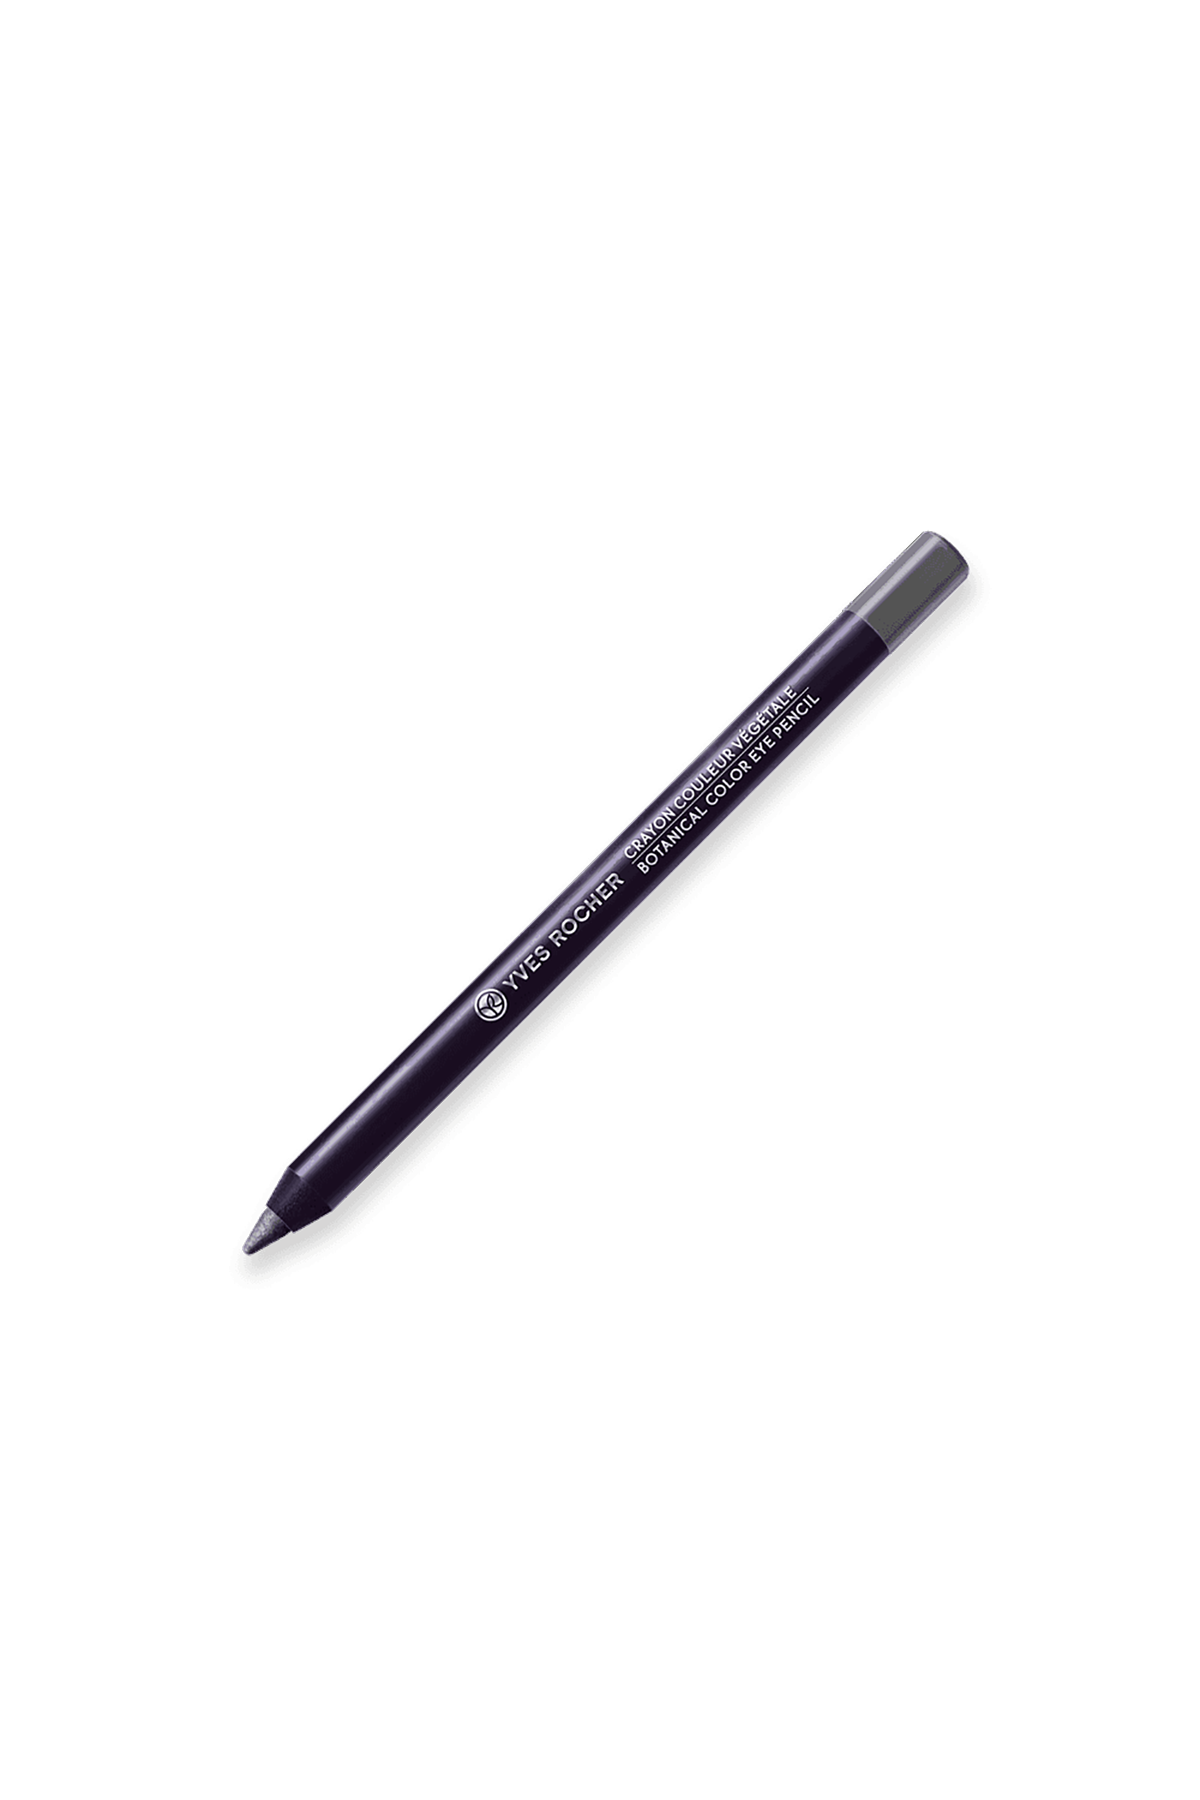 Botanical Color Eye Pencil Grey 1, 2G